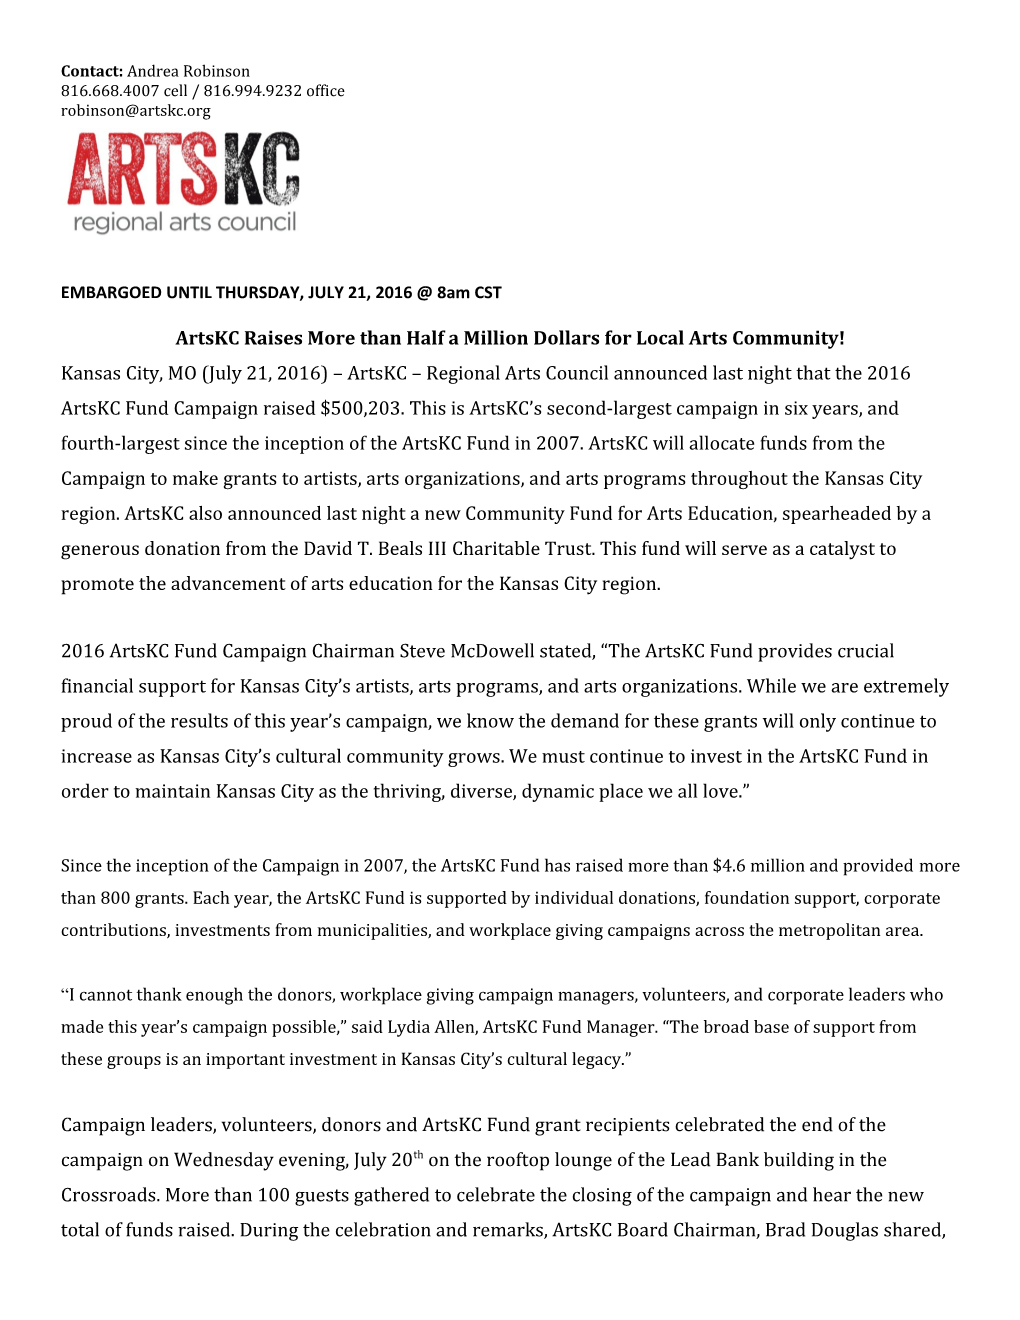 Artskc Raises More Than Half a Million Dollars for Local Arts Community!